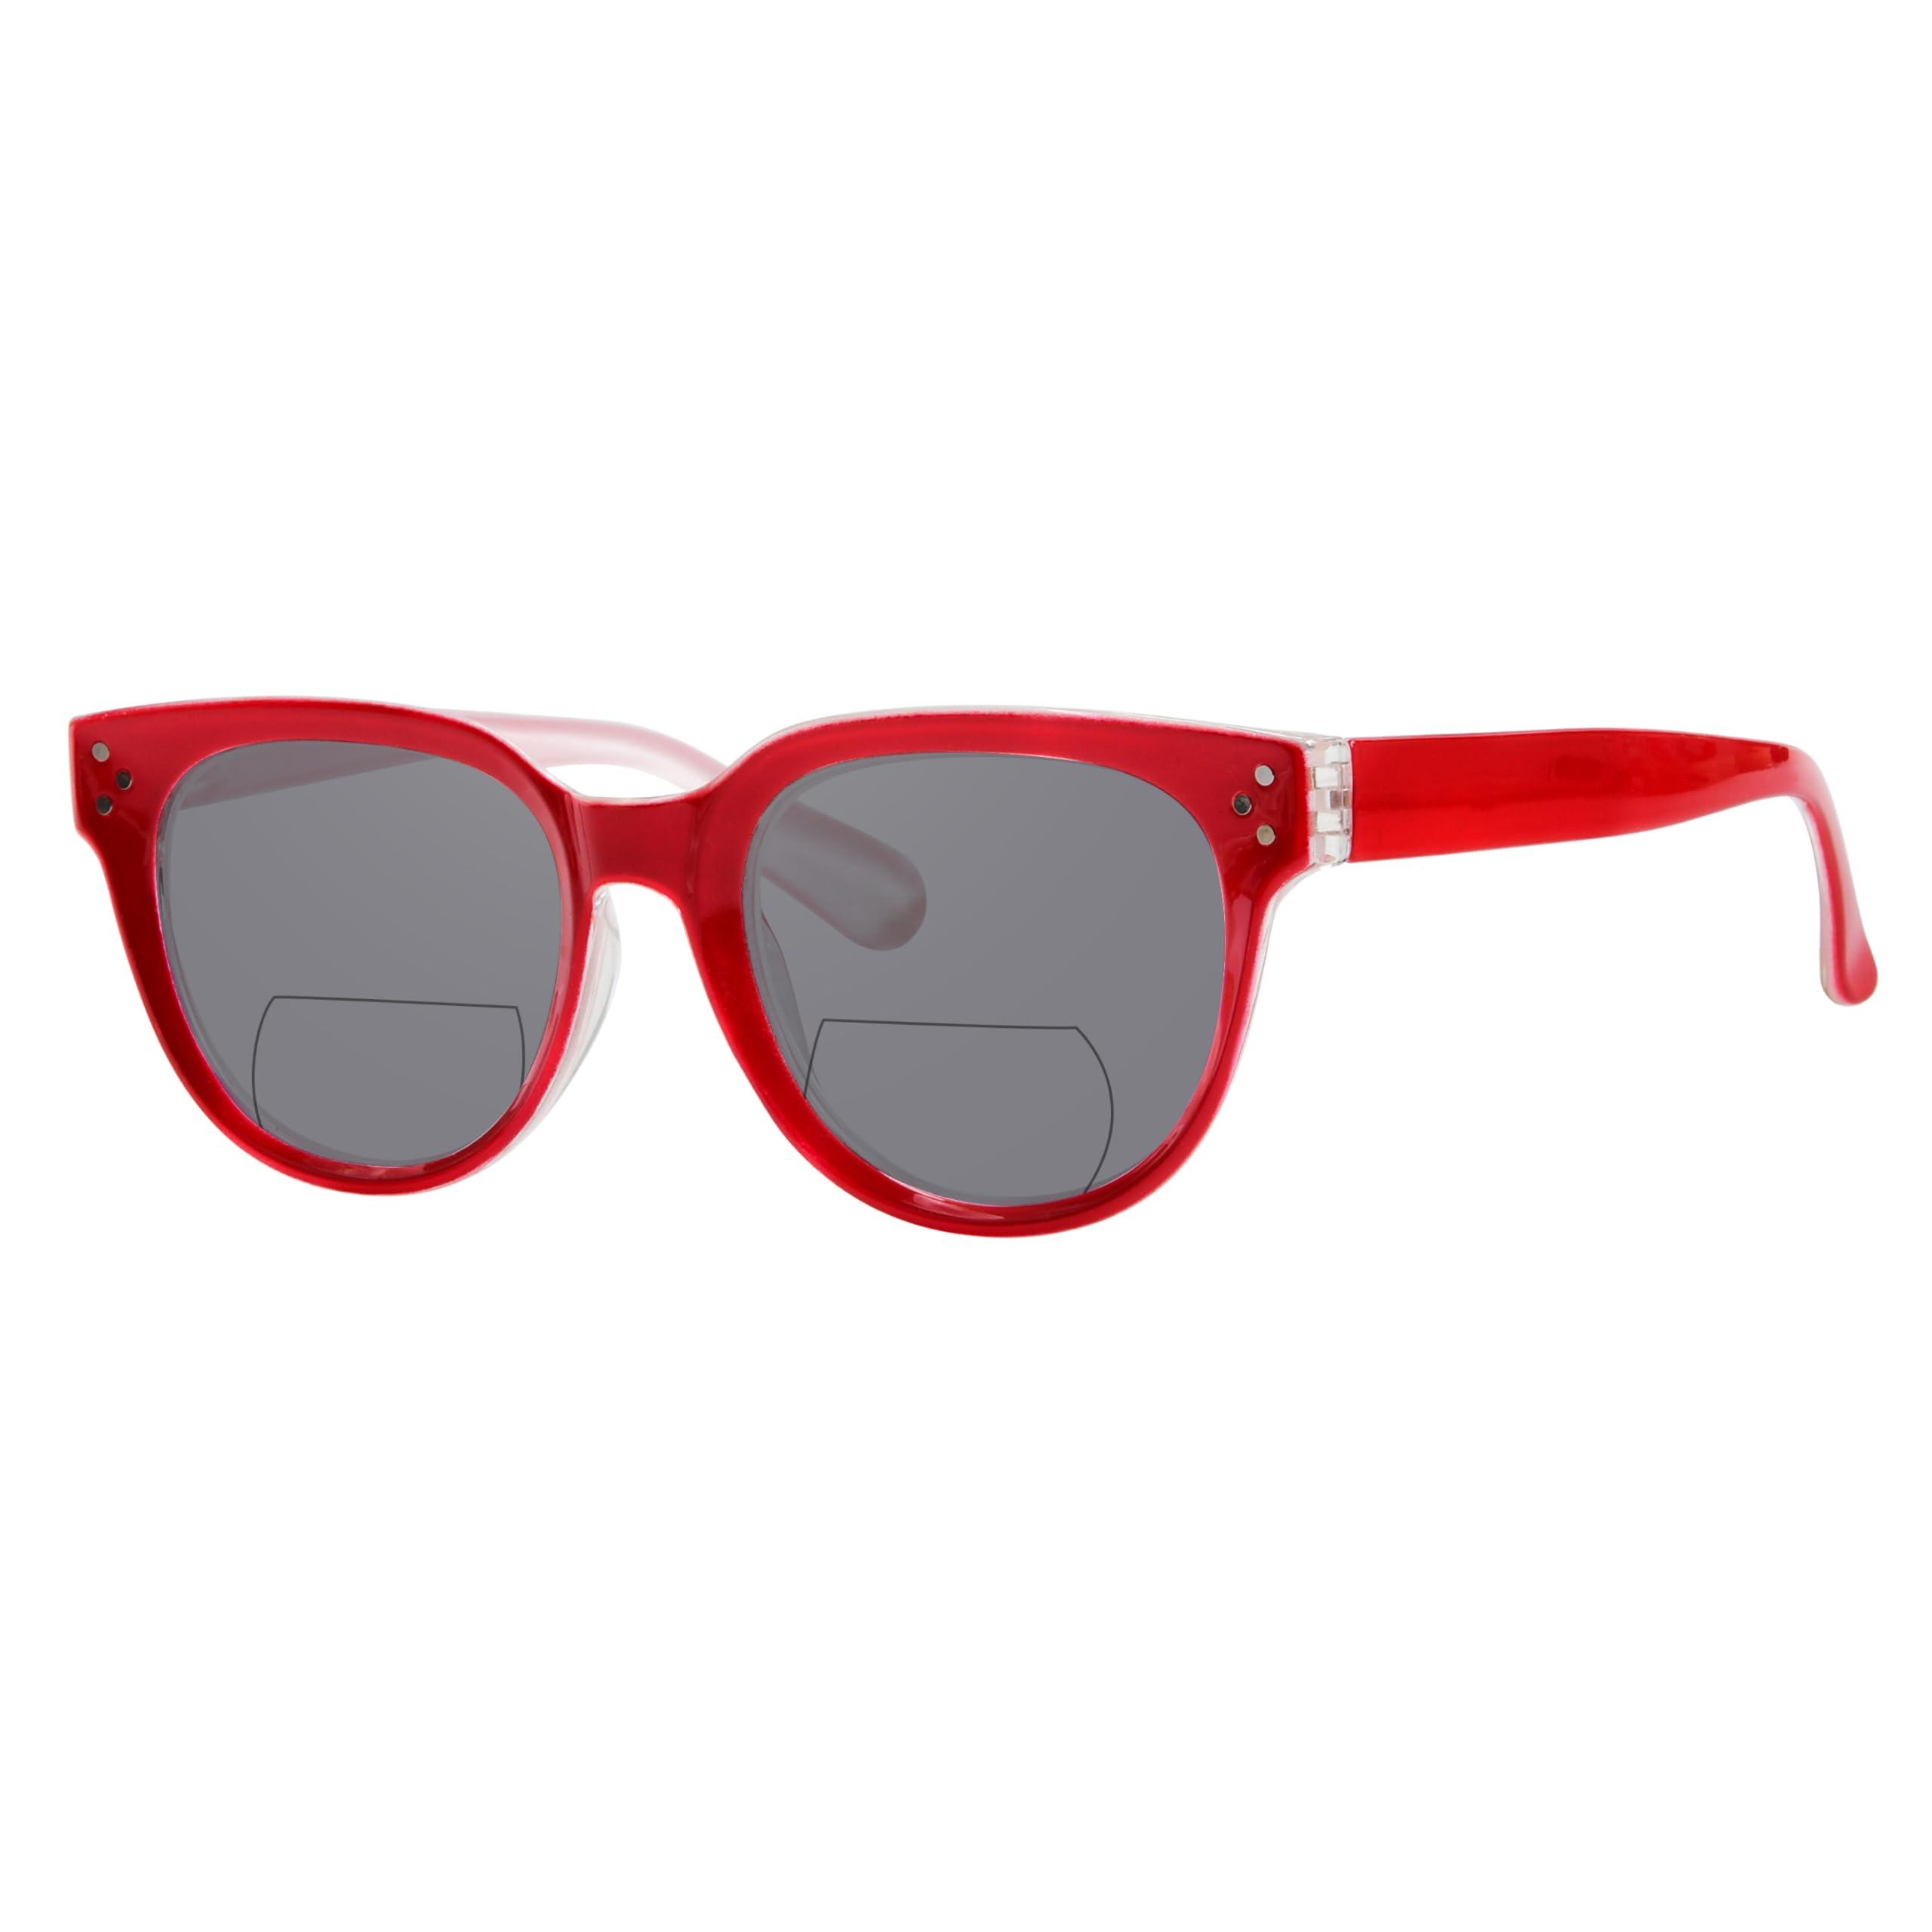 Eyekepper Bifocal Glasses for Women Reading under the Sun Stylish Bifocal Readers Tinted Lens - Red +3.00 5